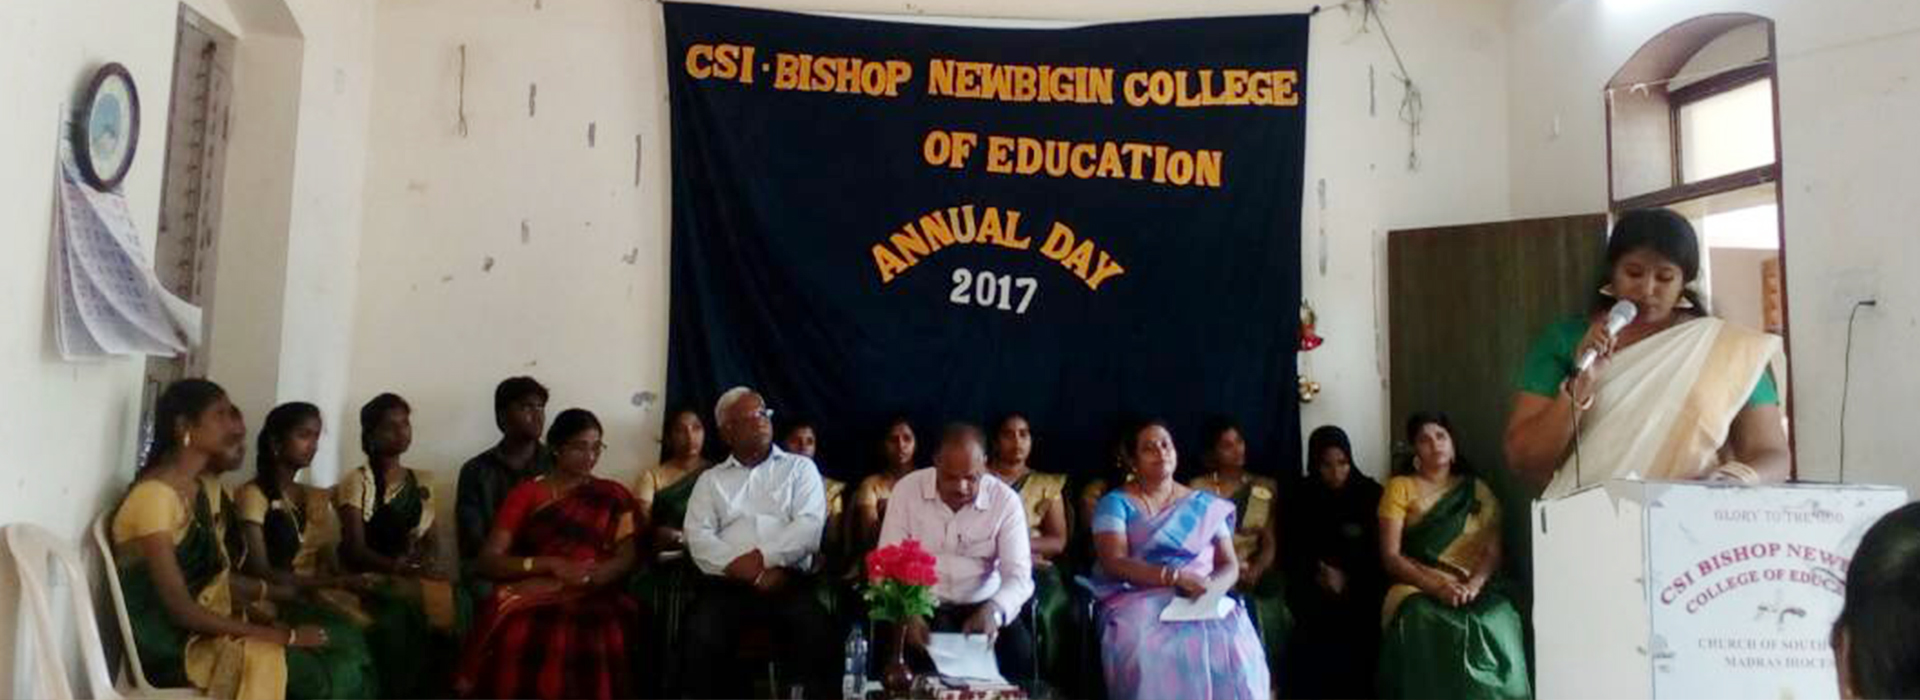 Annual day Bishop Newbigin College